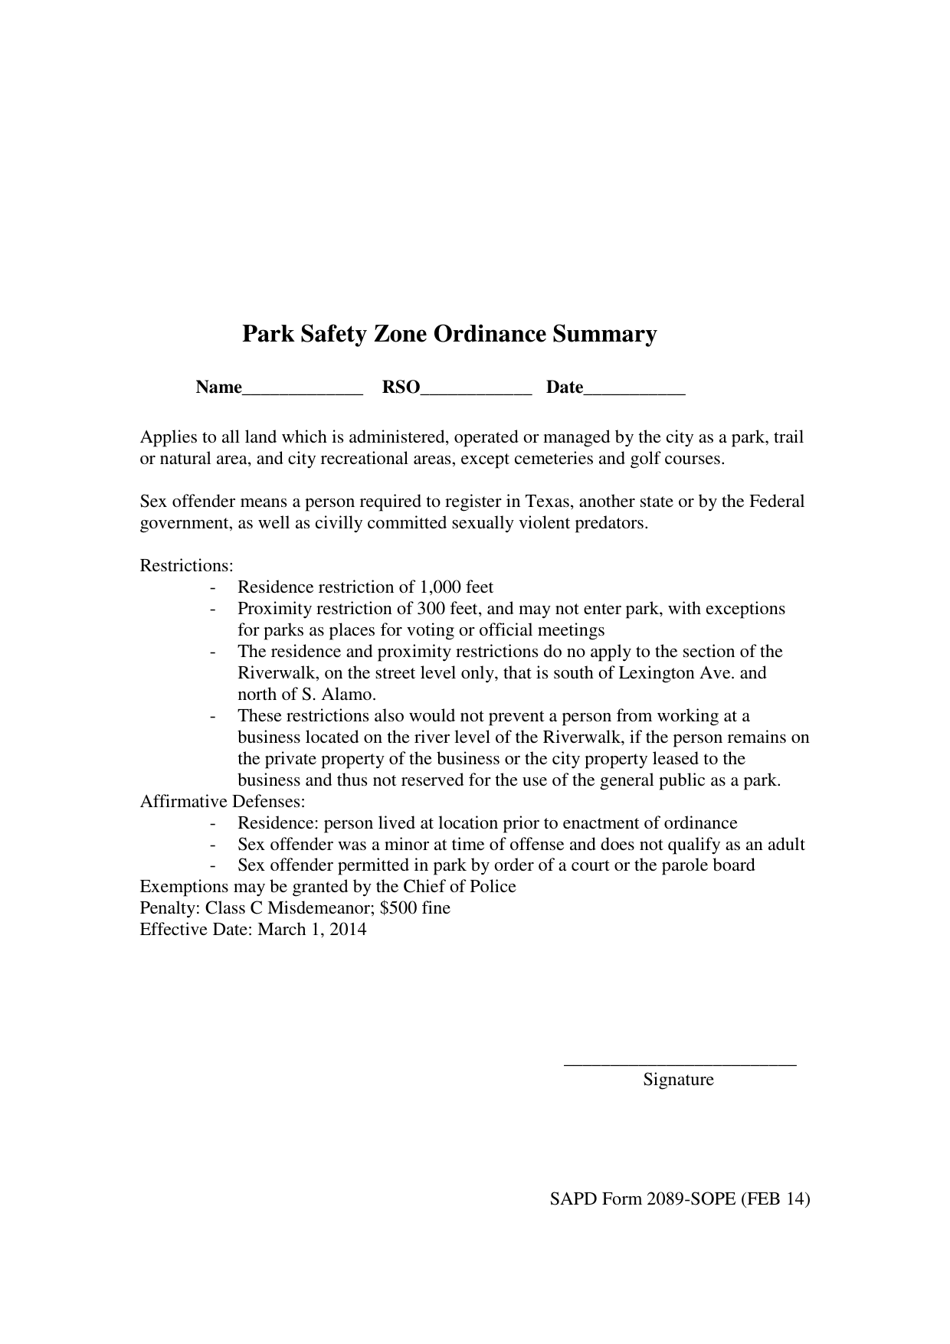 SAPD Form 2089-SOPE Park Safety Zone Ordinance Summary - City of San Antonio, Texas, Page 1